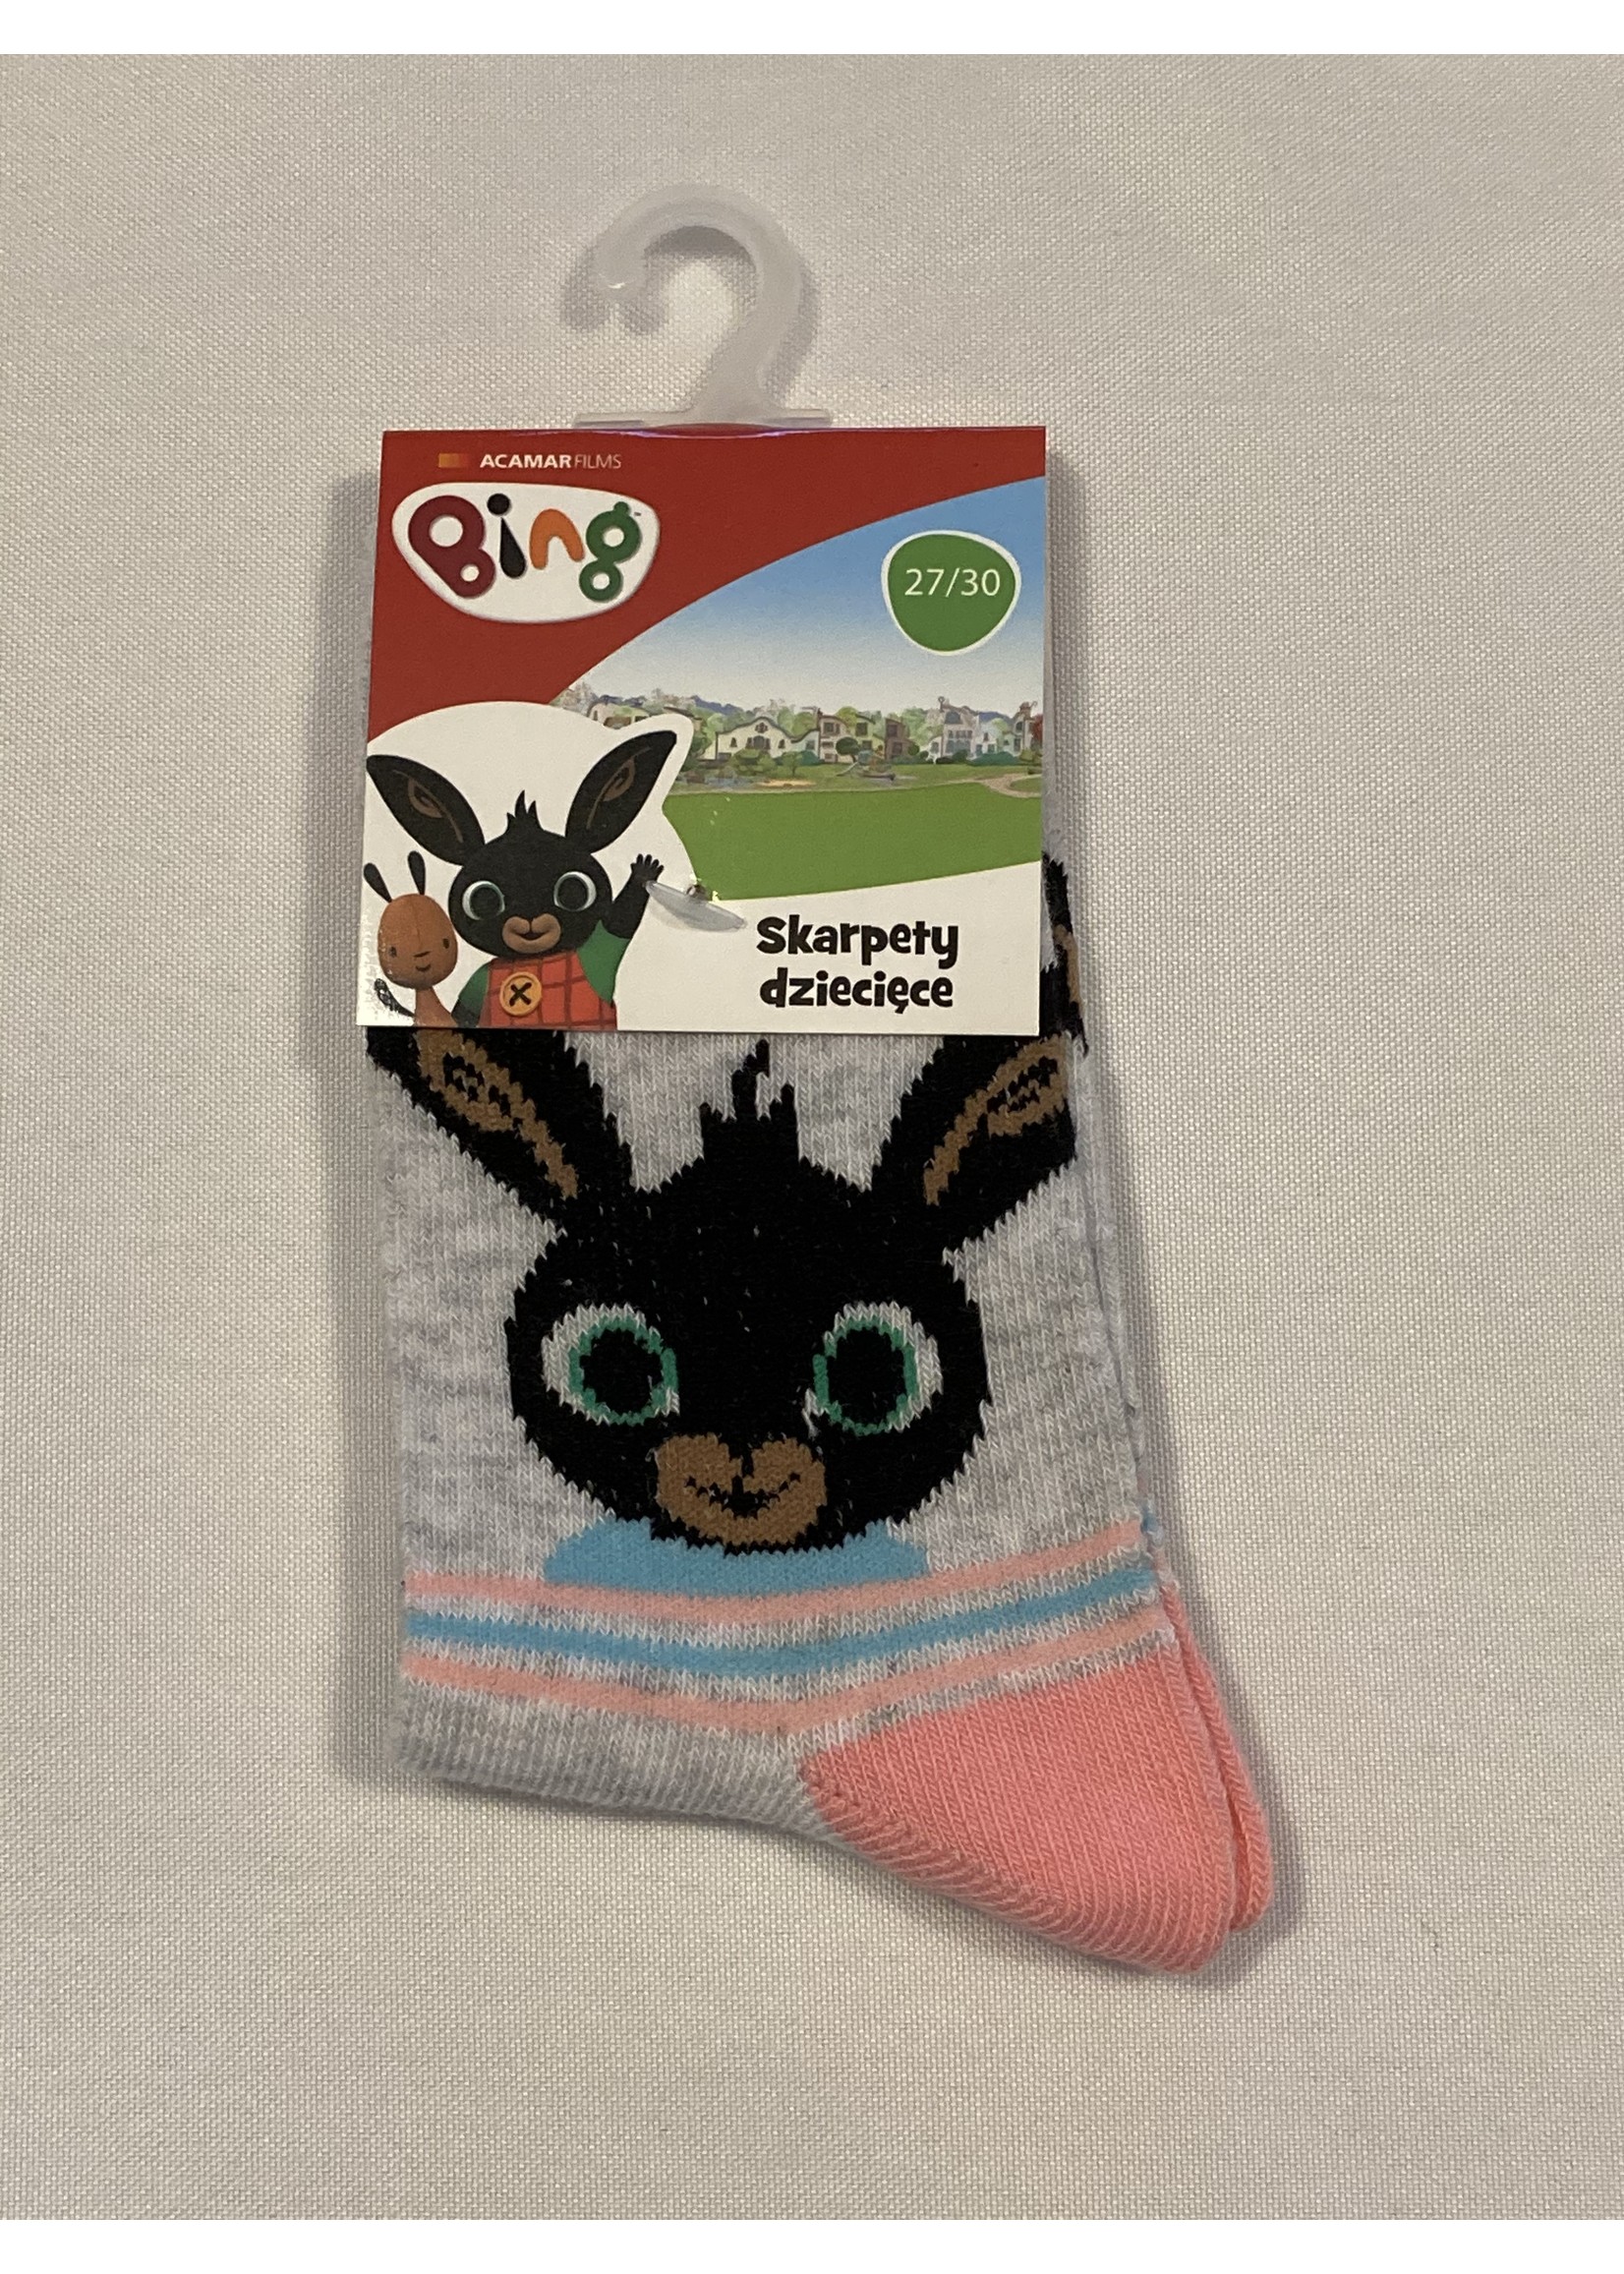 Bing Bunny Bing socks from Bing gray